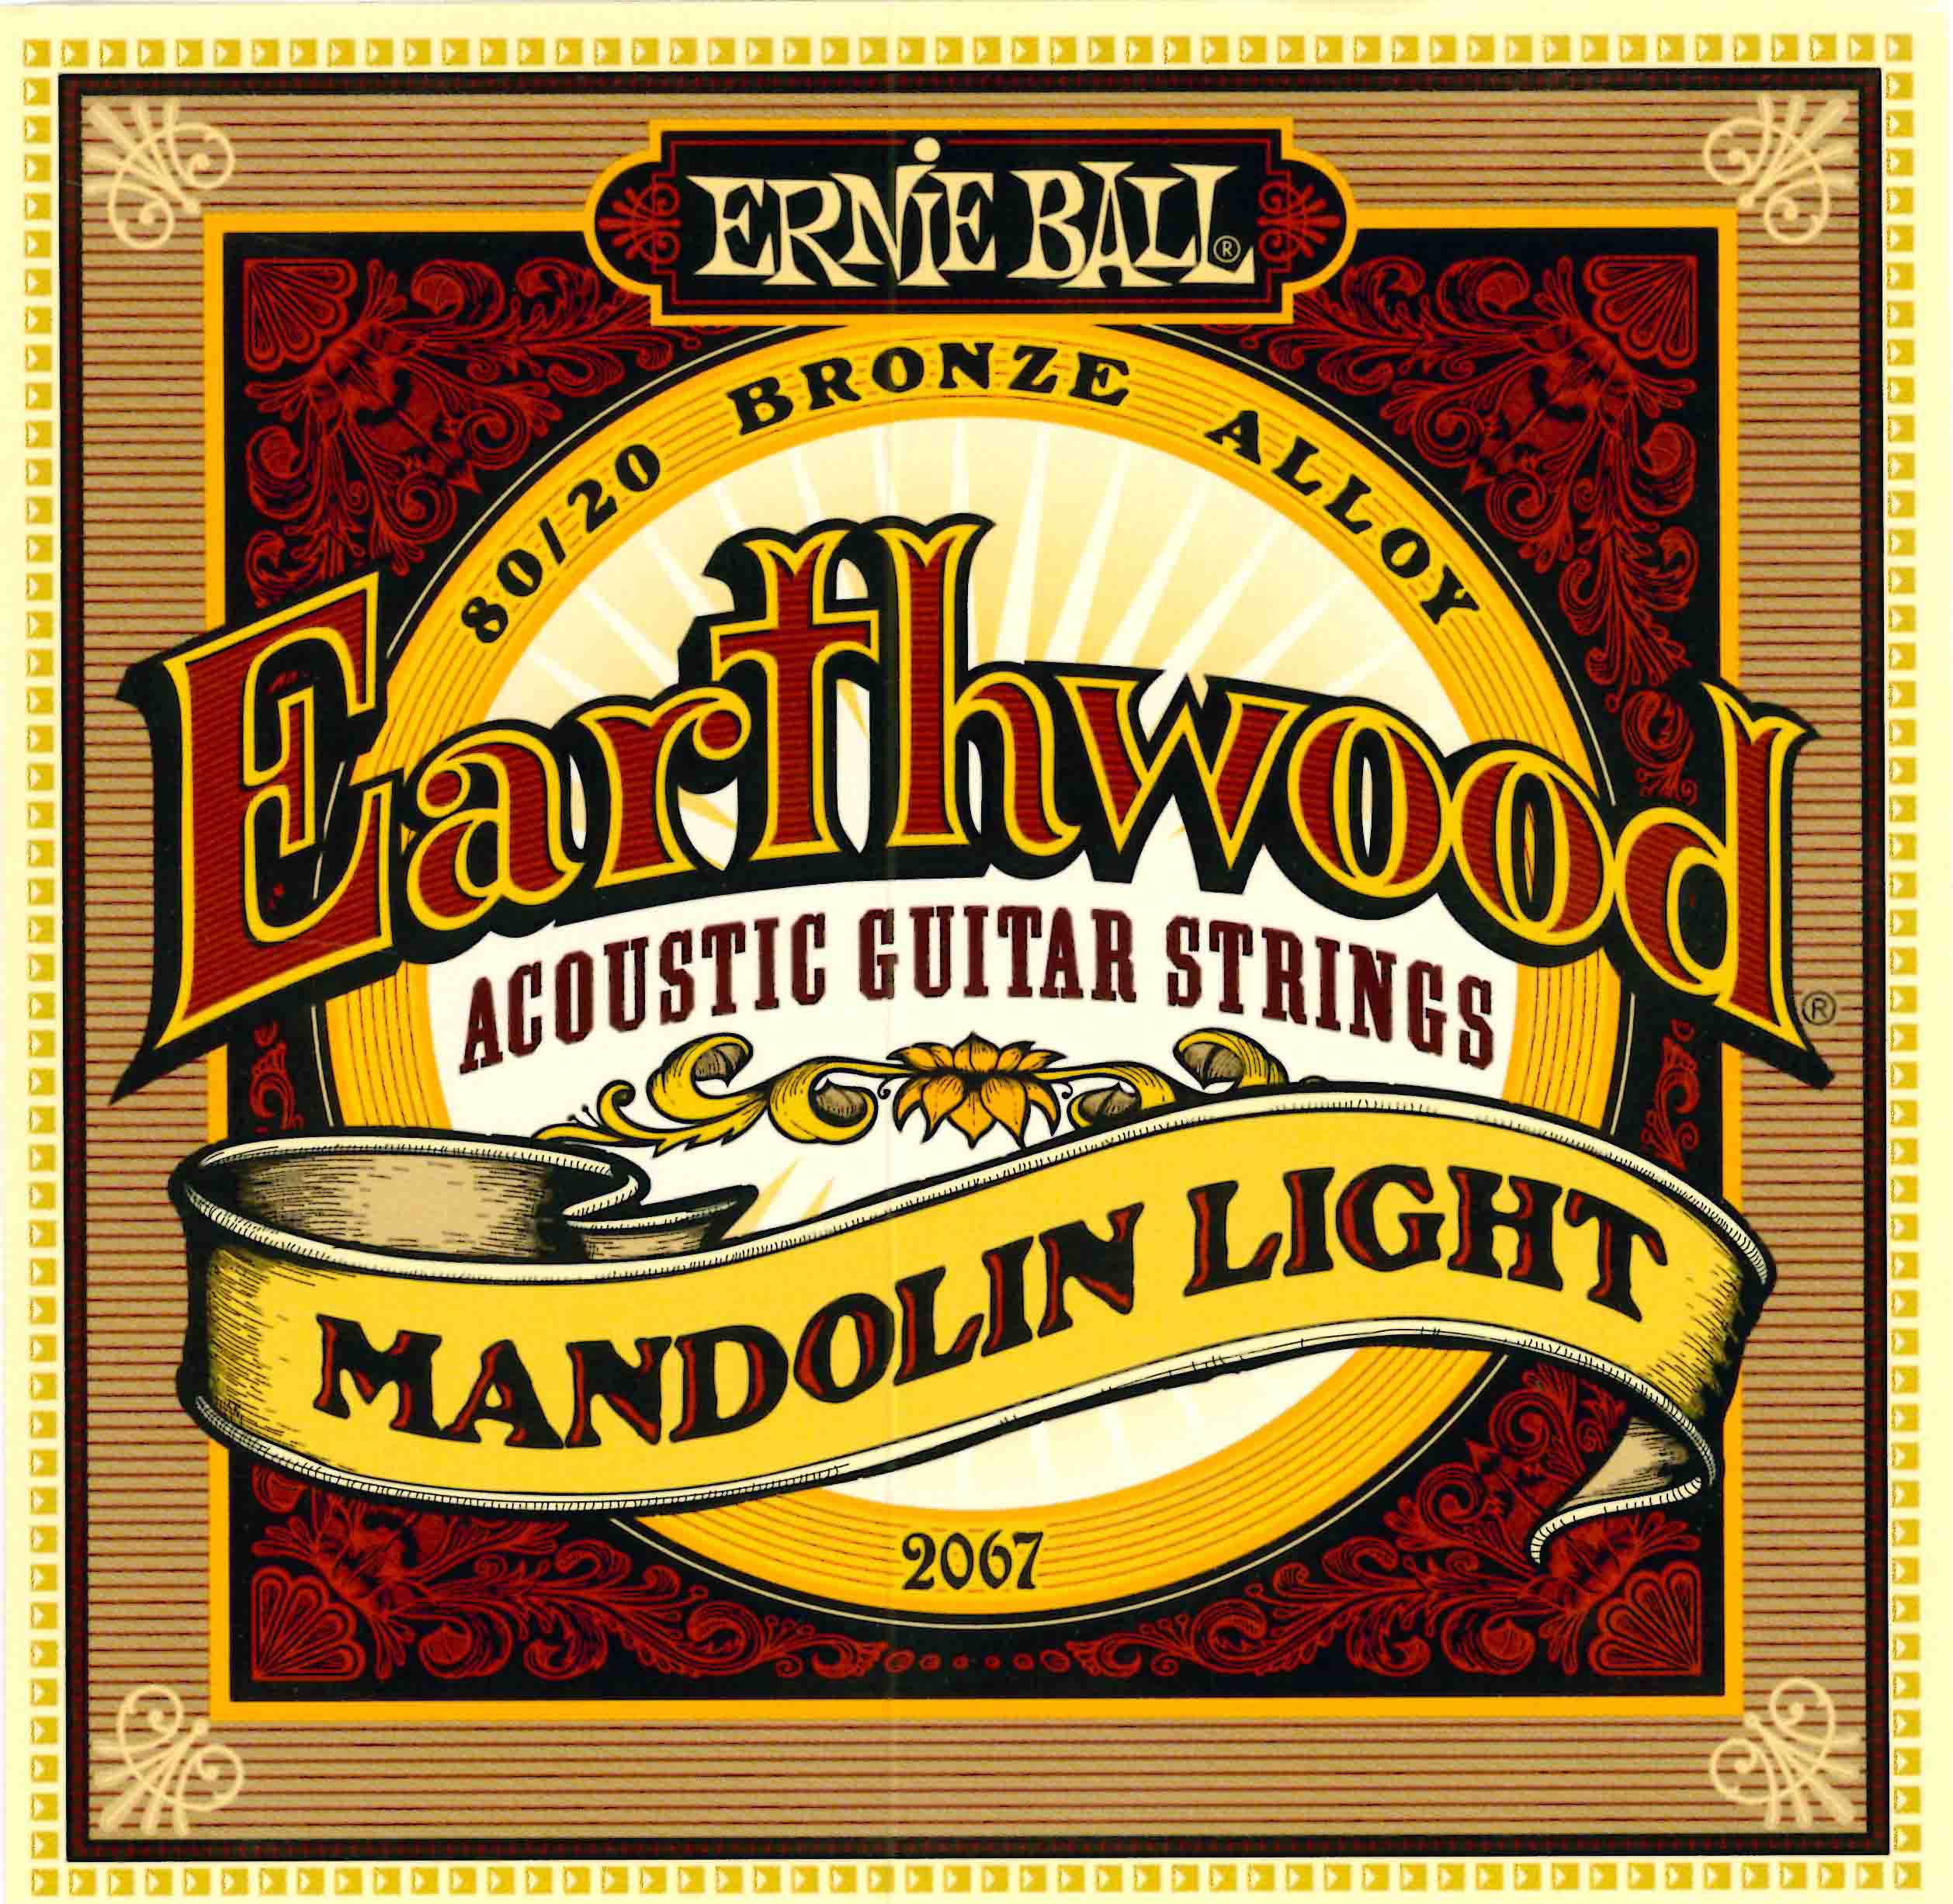 ERNIE BALL 2067 Earthwood 80/20 Bronze Mandolin Light 9-34